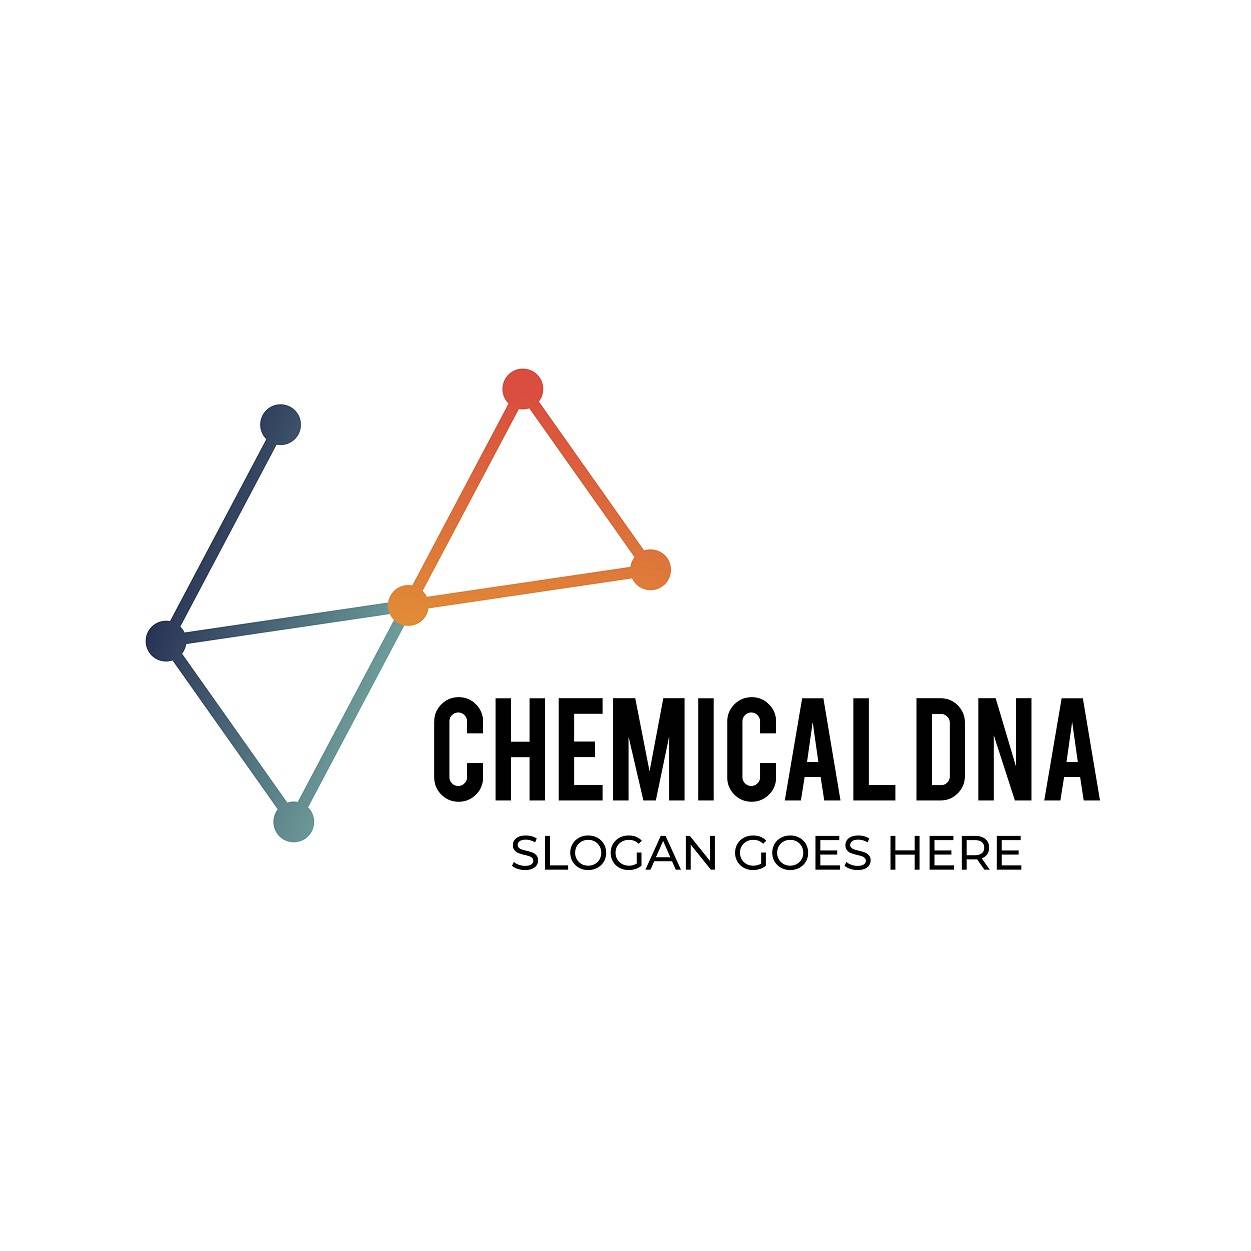 Chemical dna logo for medical